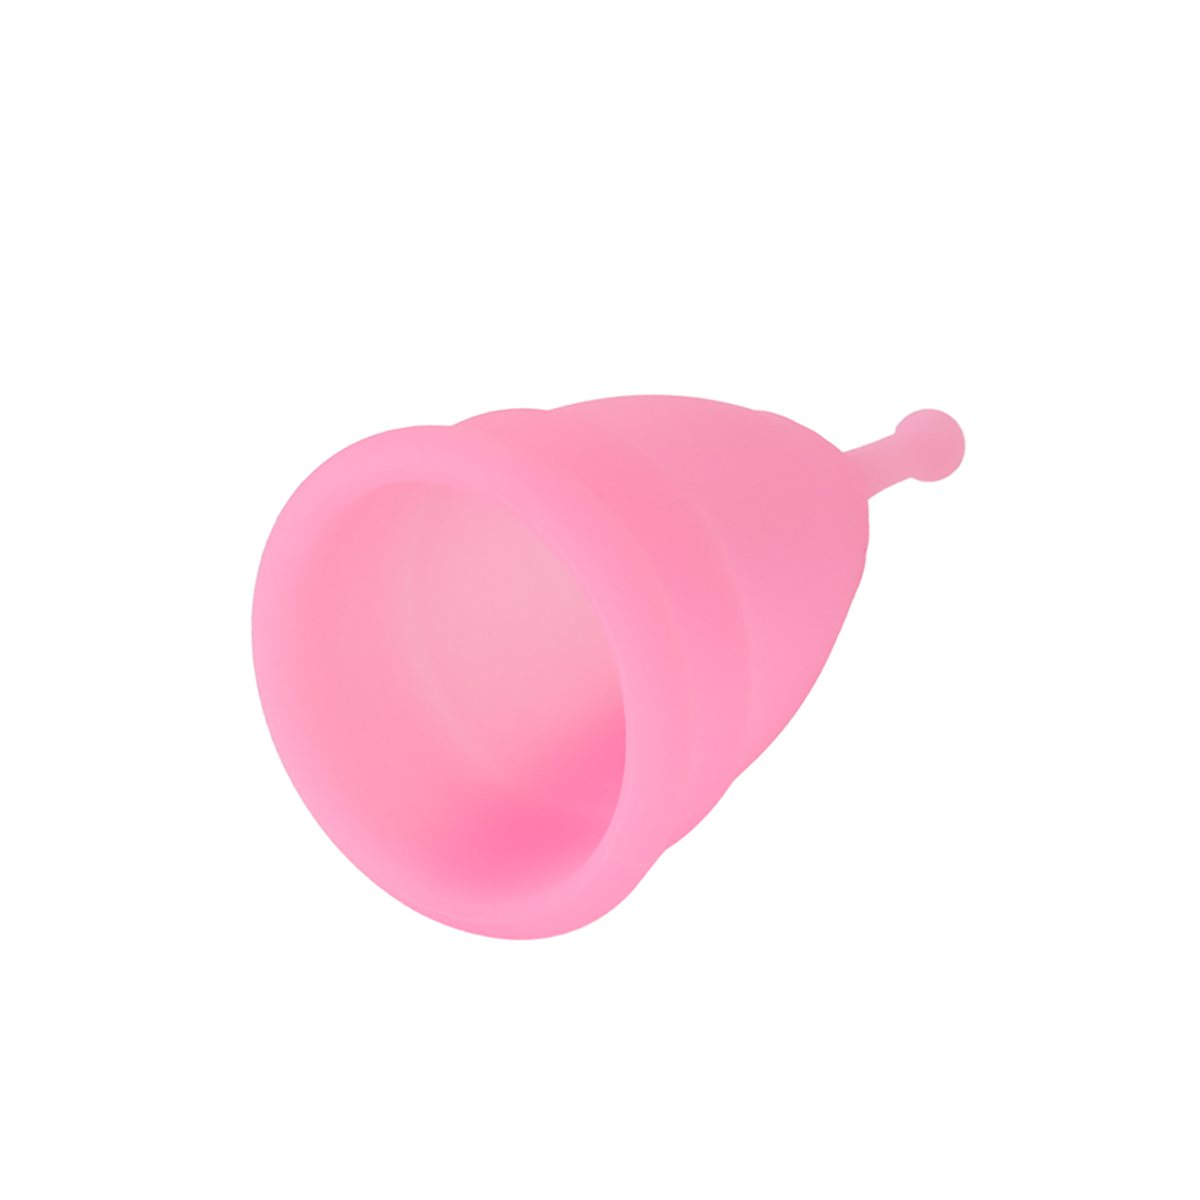 Menstrual-Cup-Pink-45-mm-OPR-3330100-3